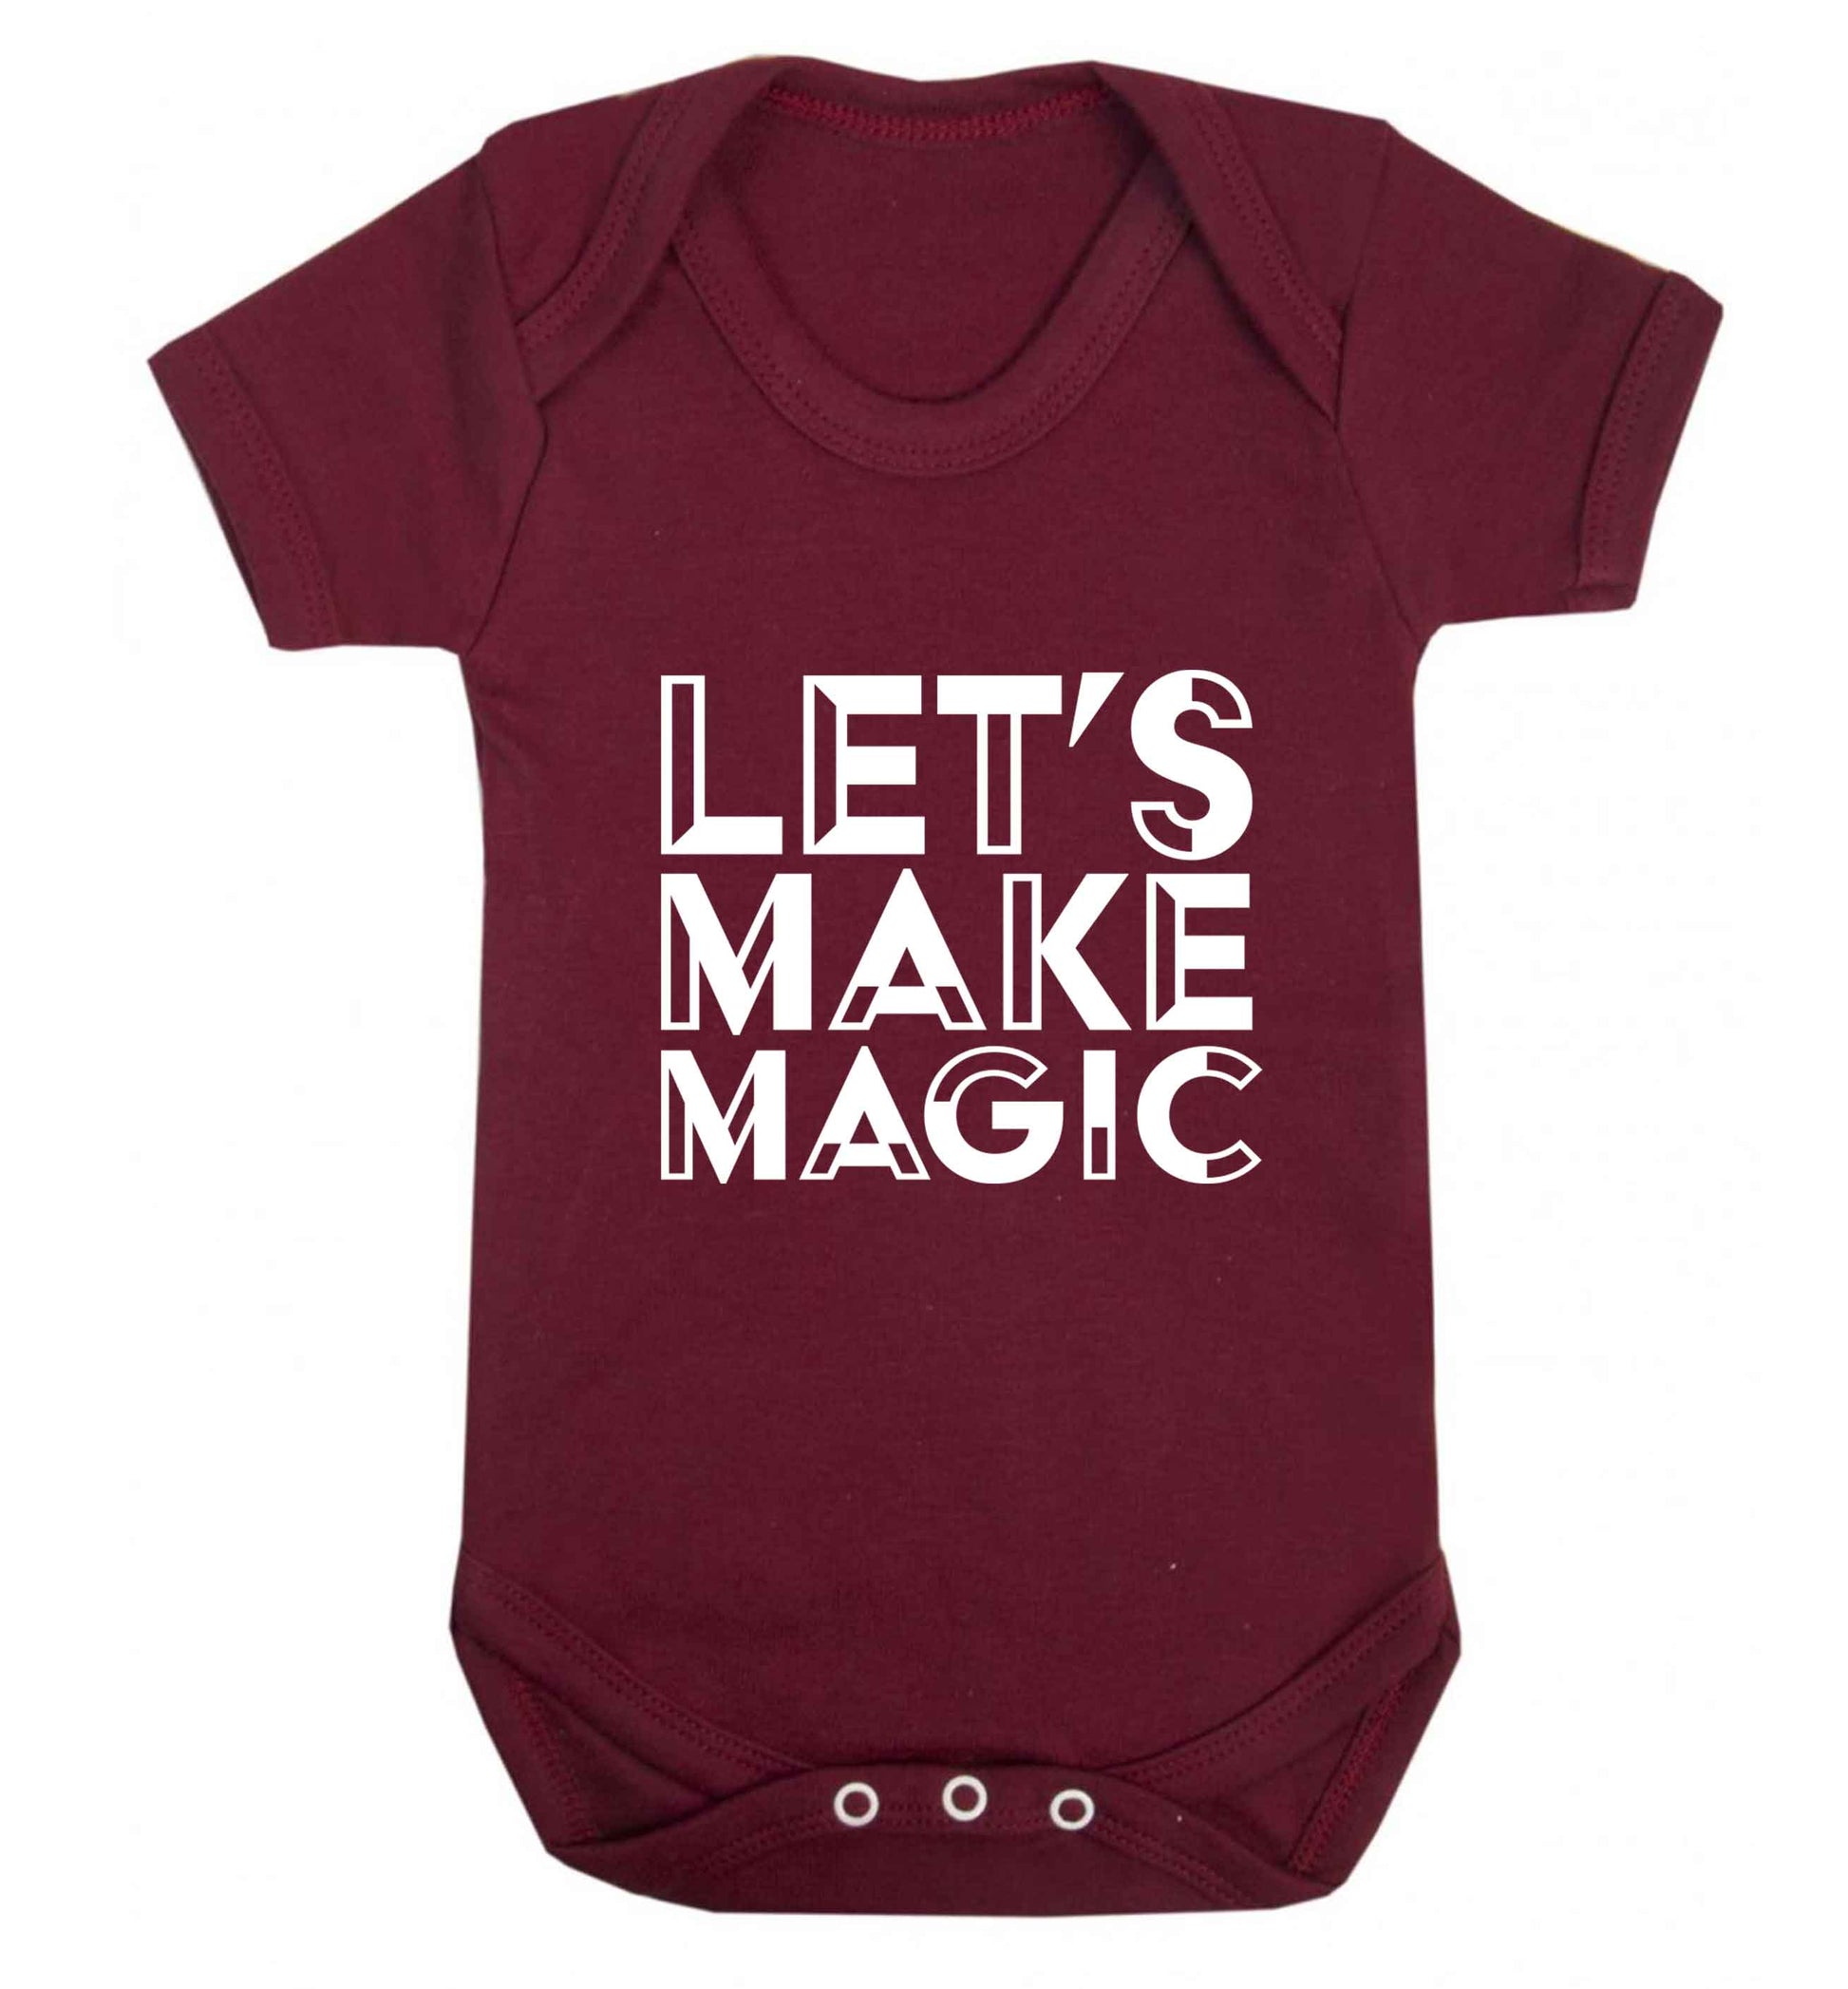 Let's make magic baby vest maroon 18-24 months